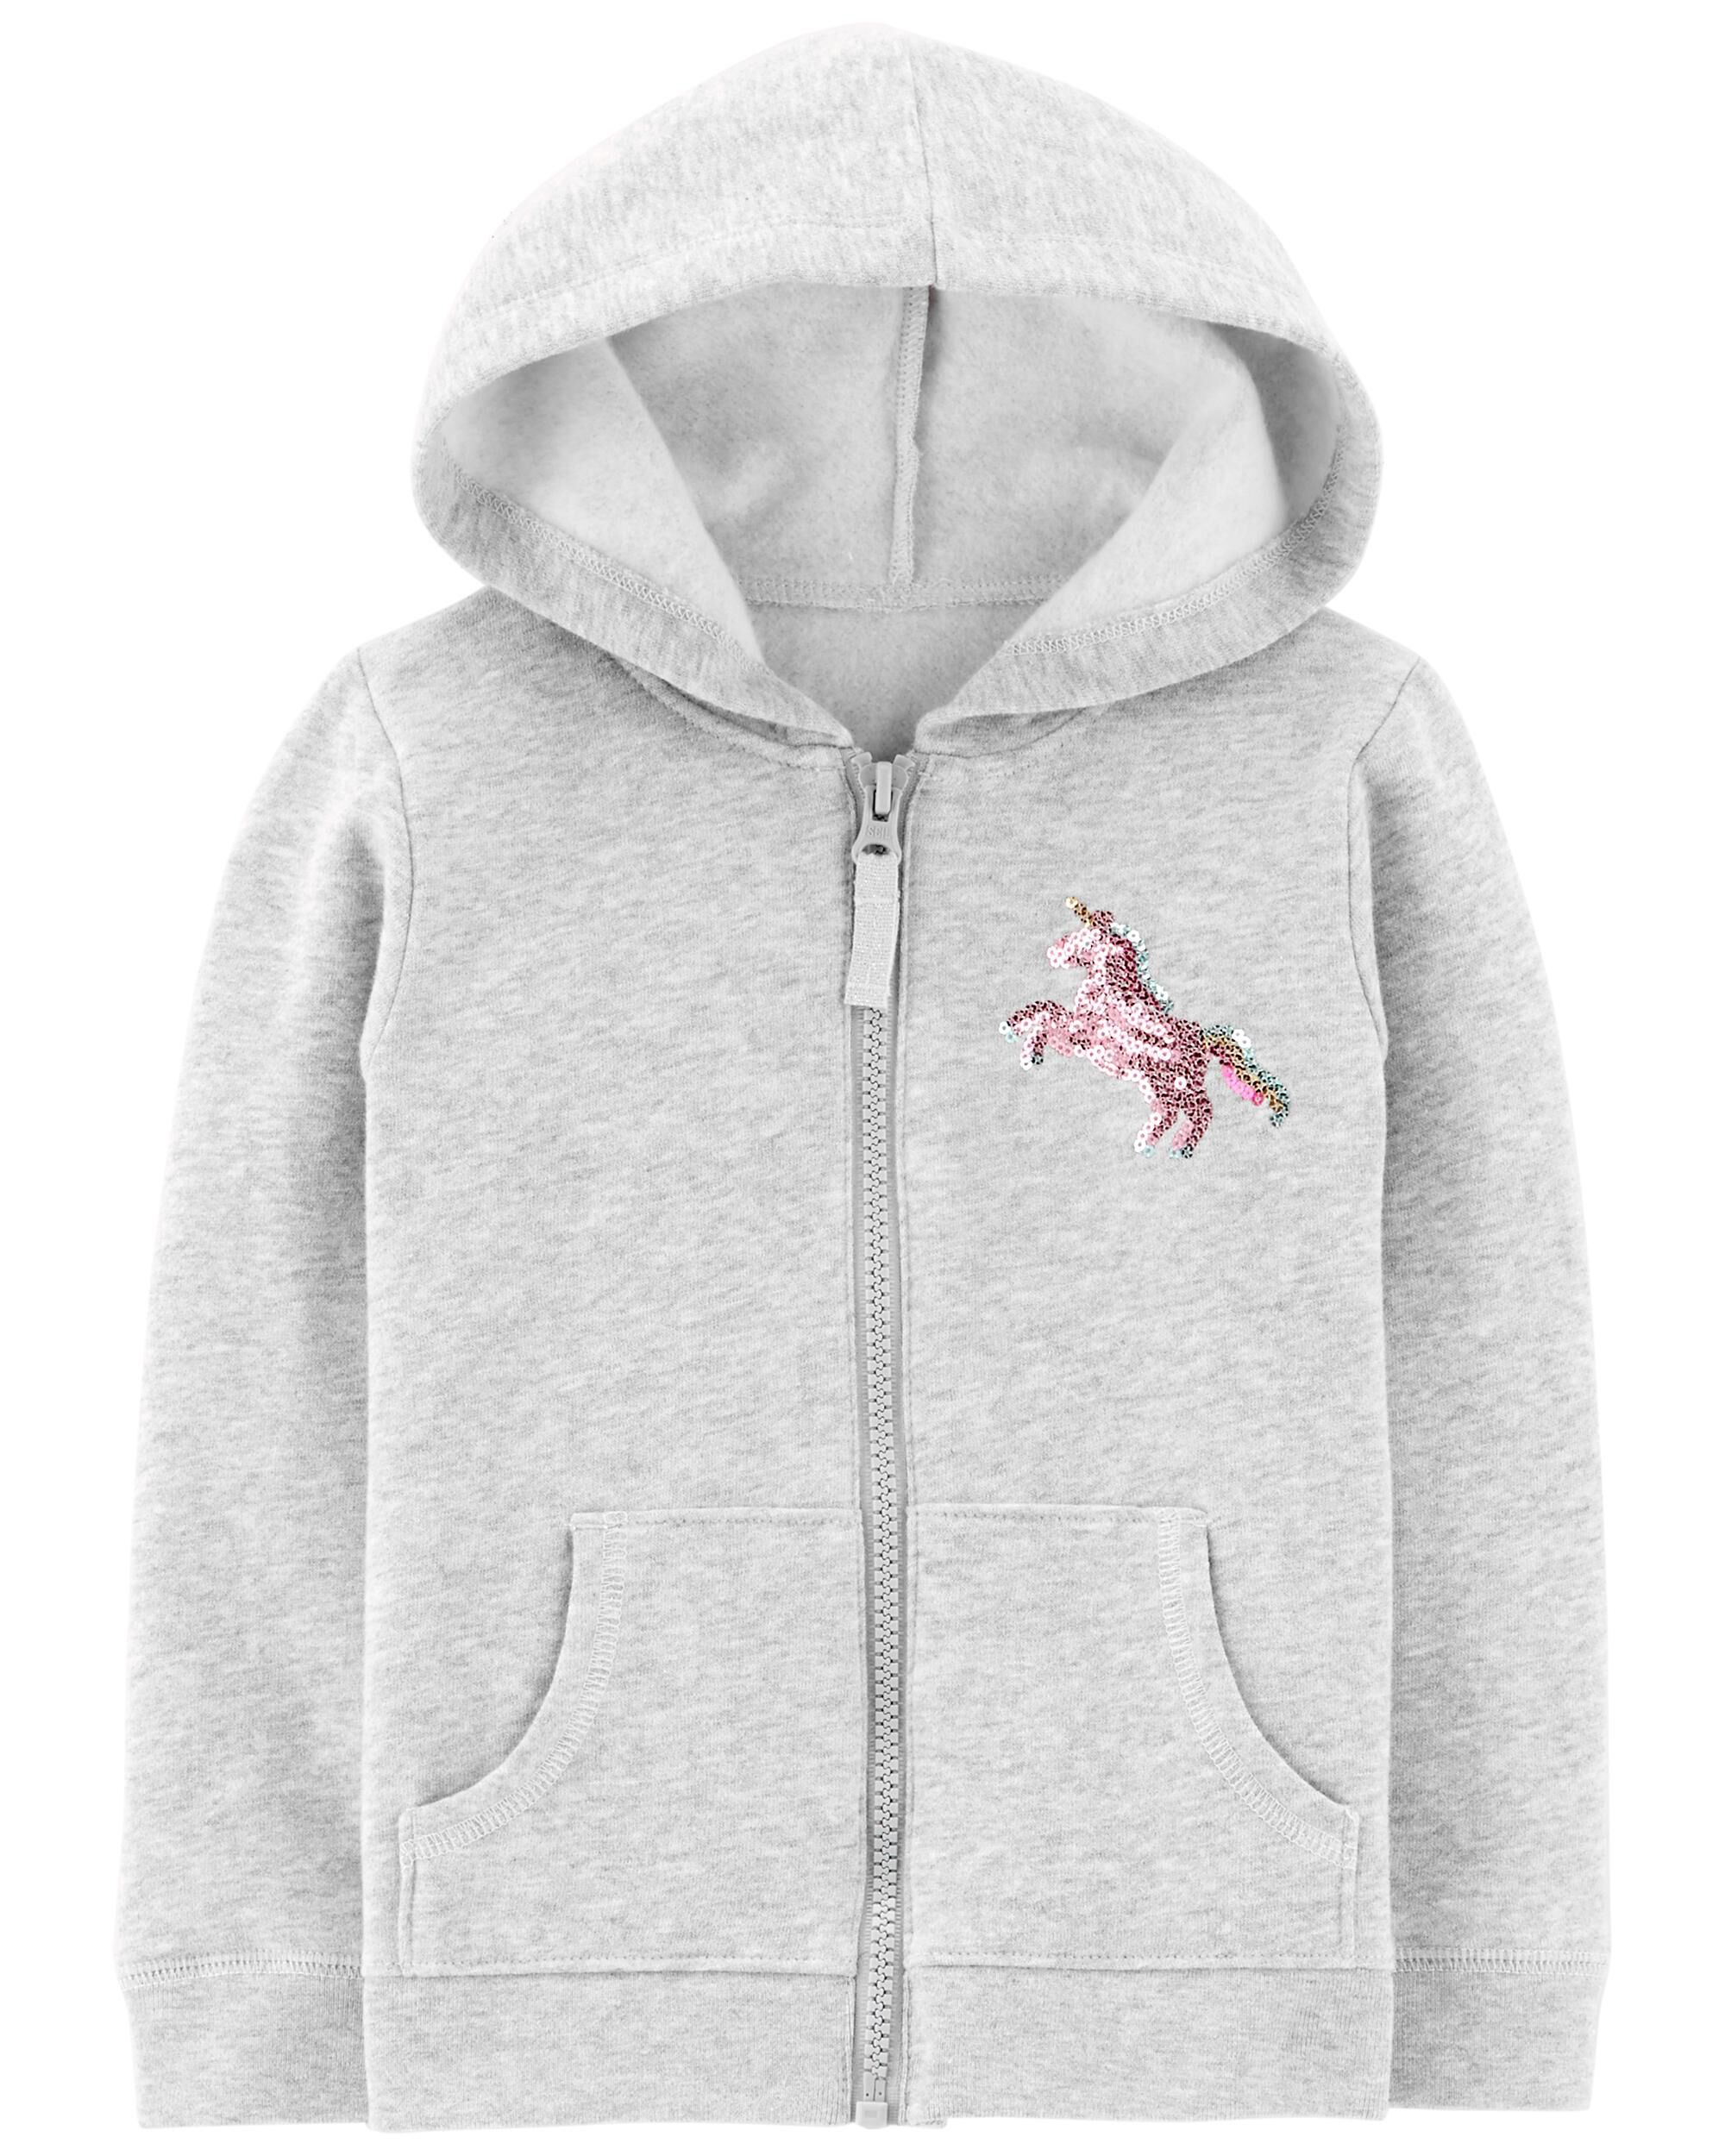 unicorn zip up hoodie